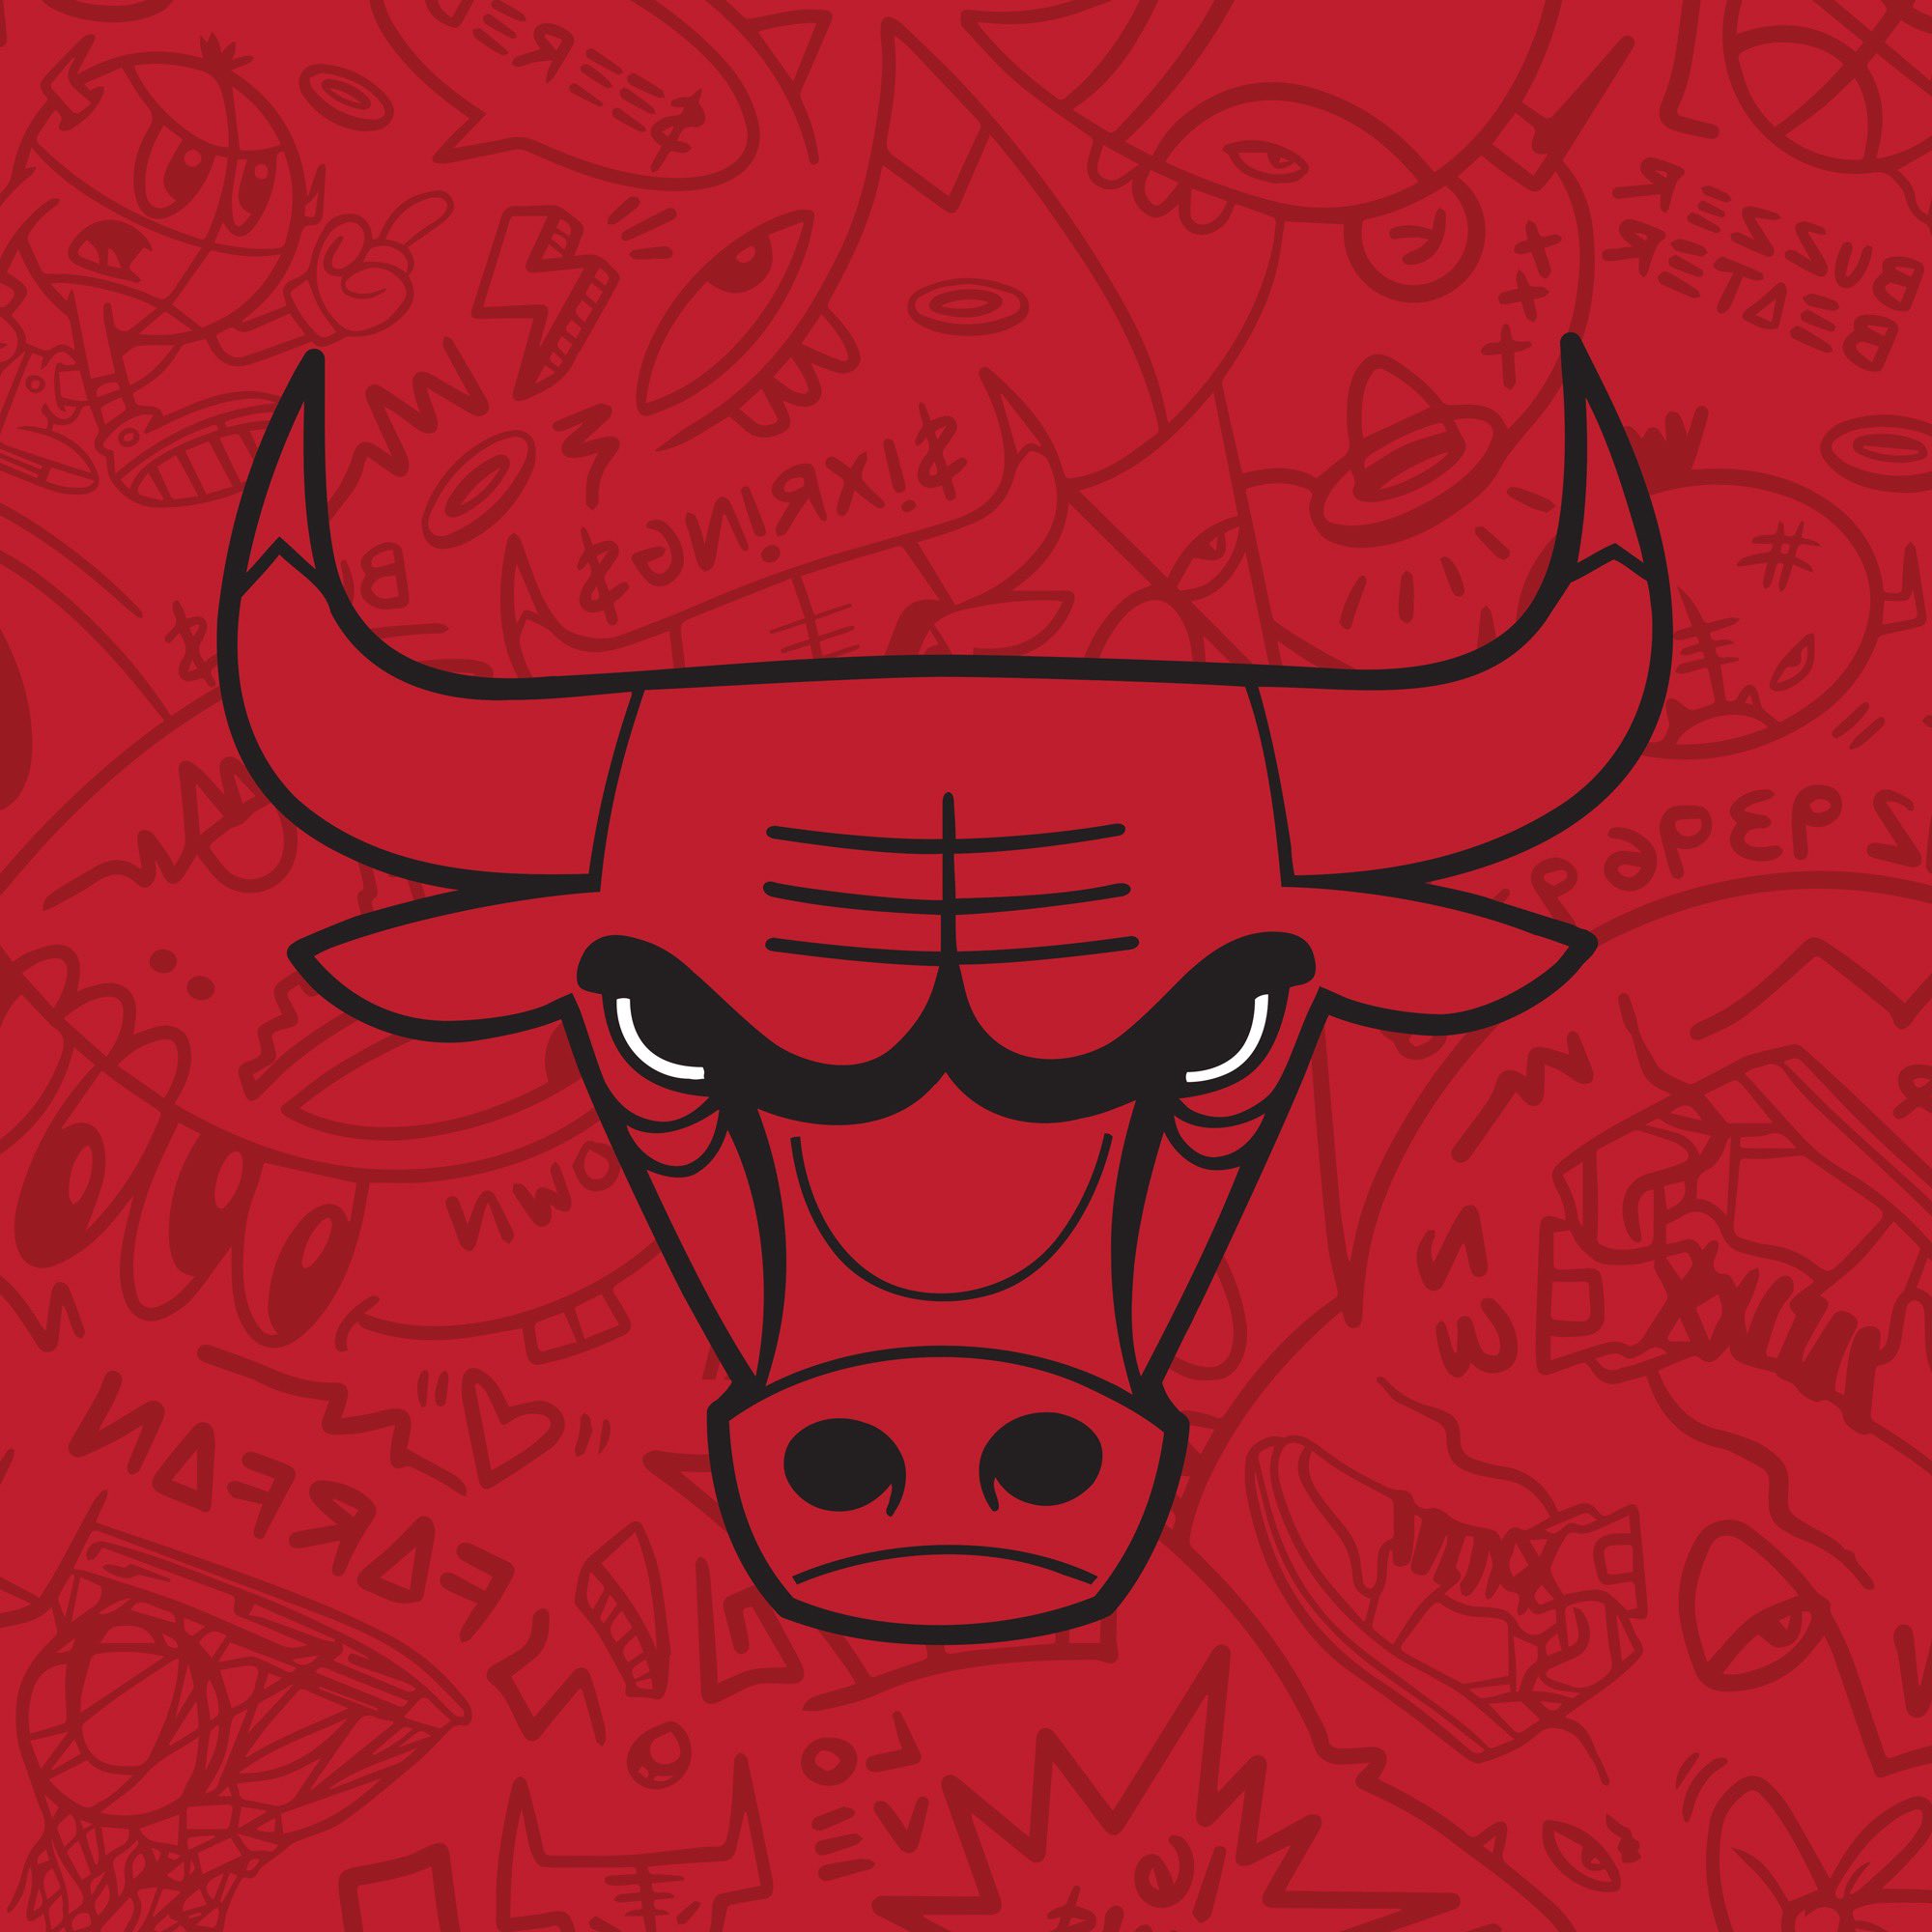 Chicago bulls see red - Gem